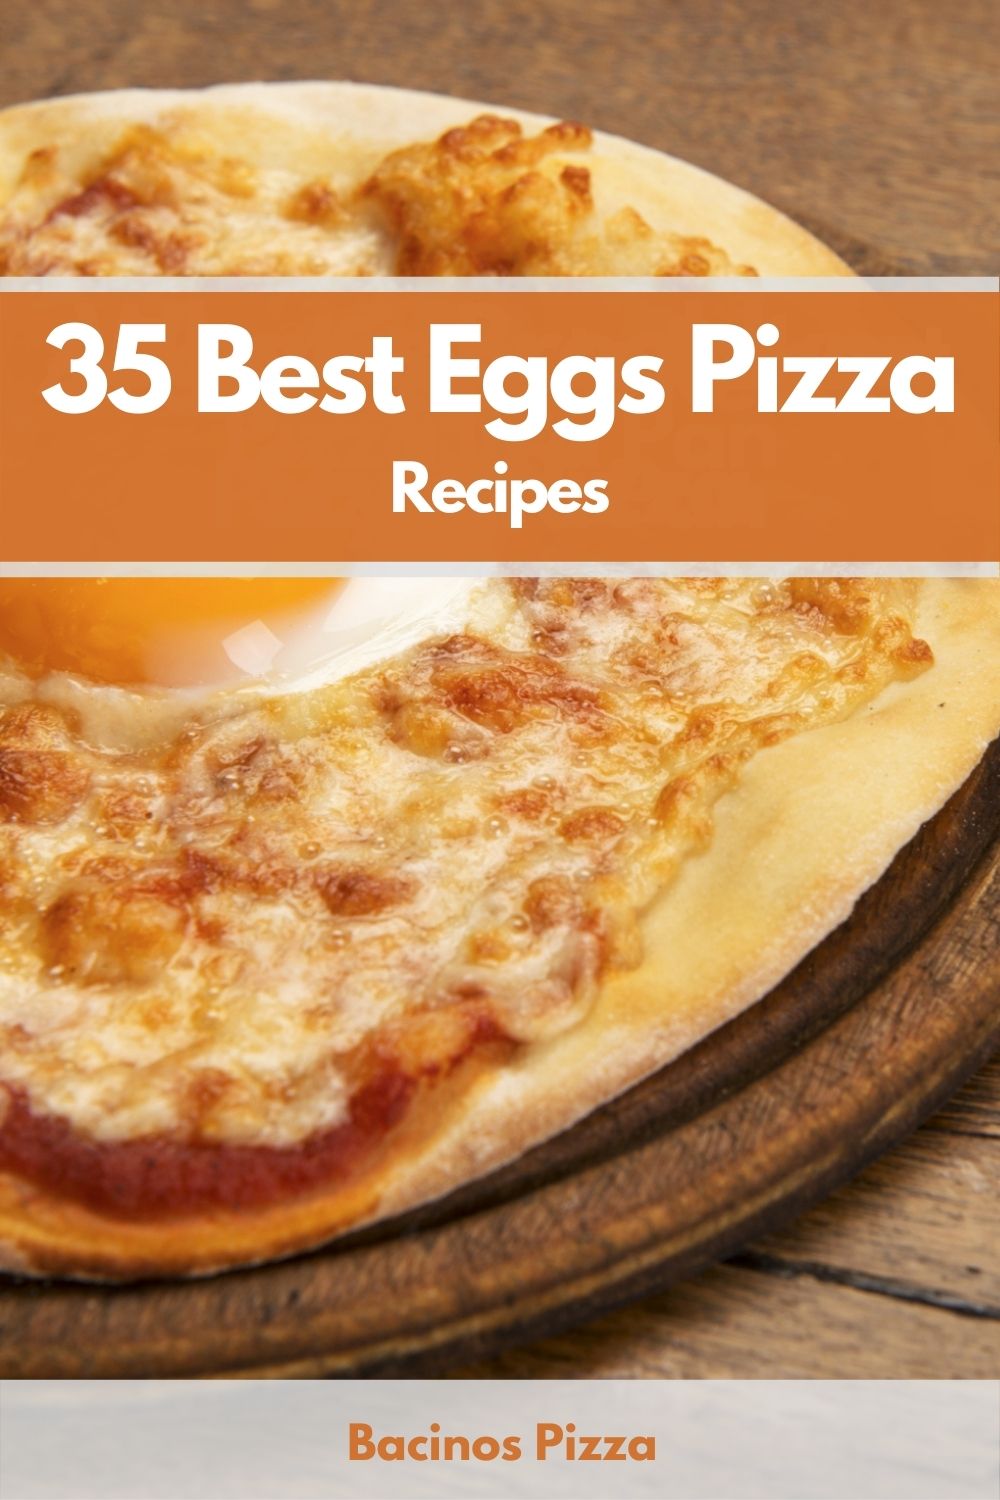 35 Best Eggs Pizza Recipes pin